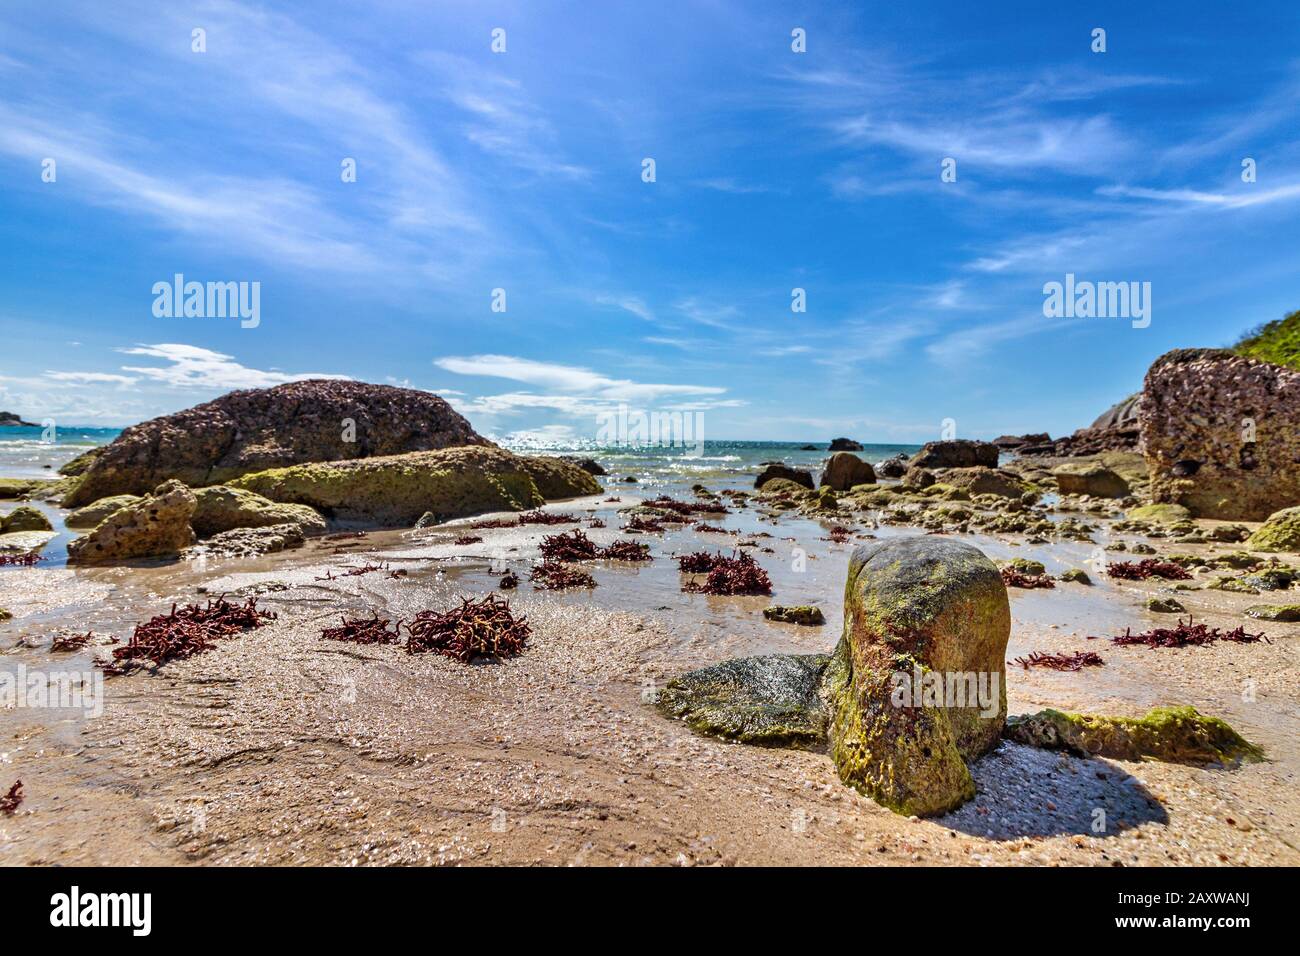 Scenic view of rocks and beach at the coastline of Lizard Island in Australia Stock Photo